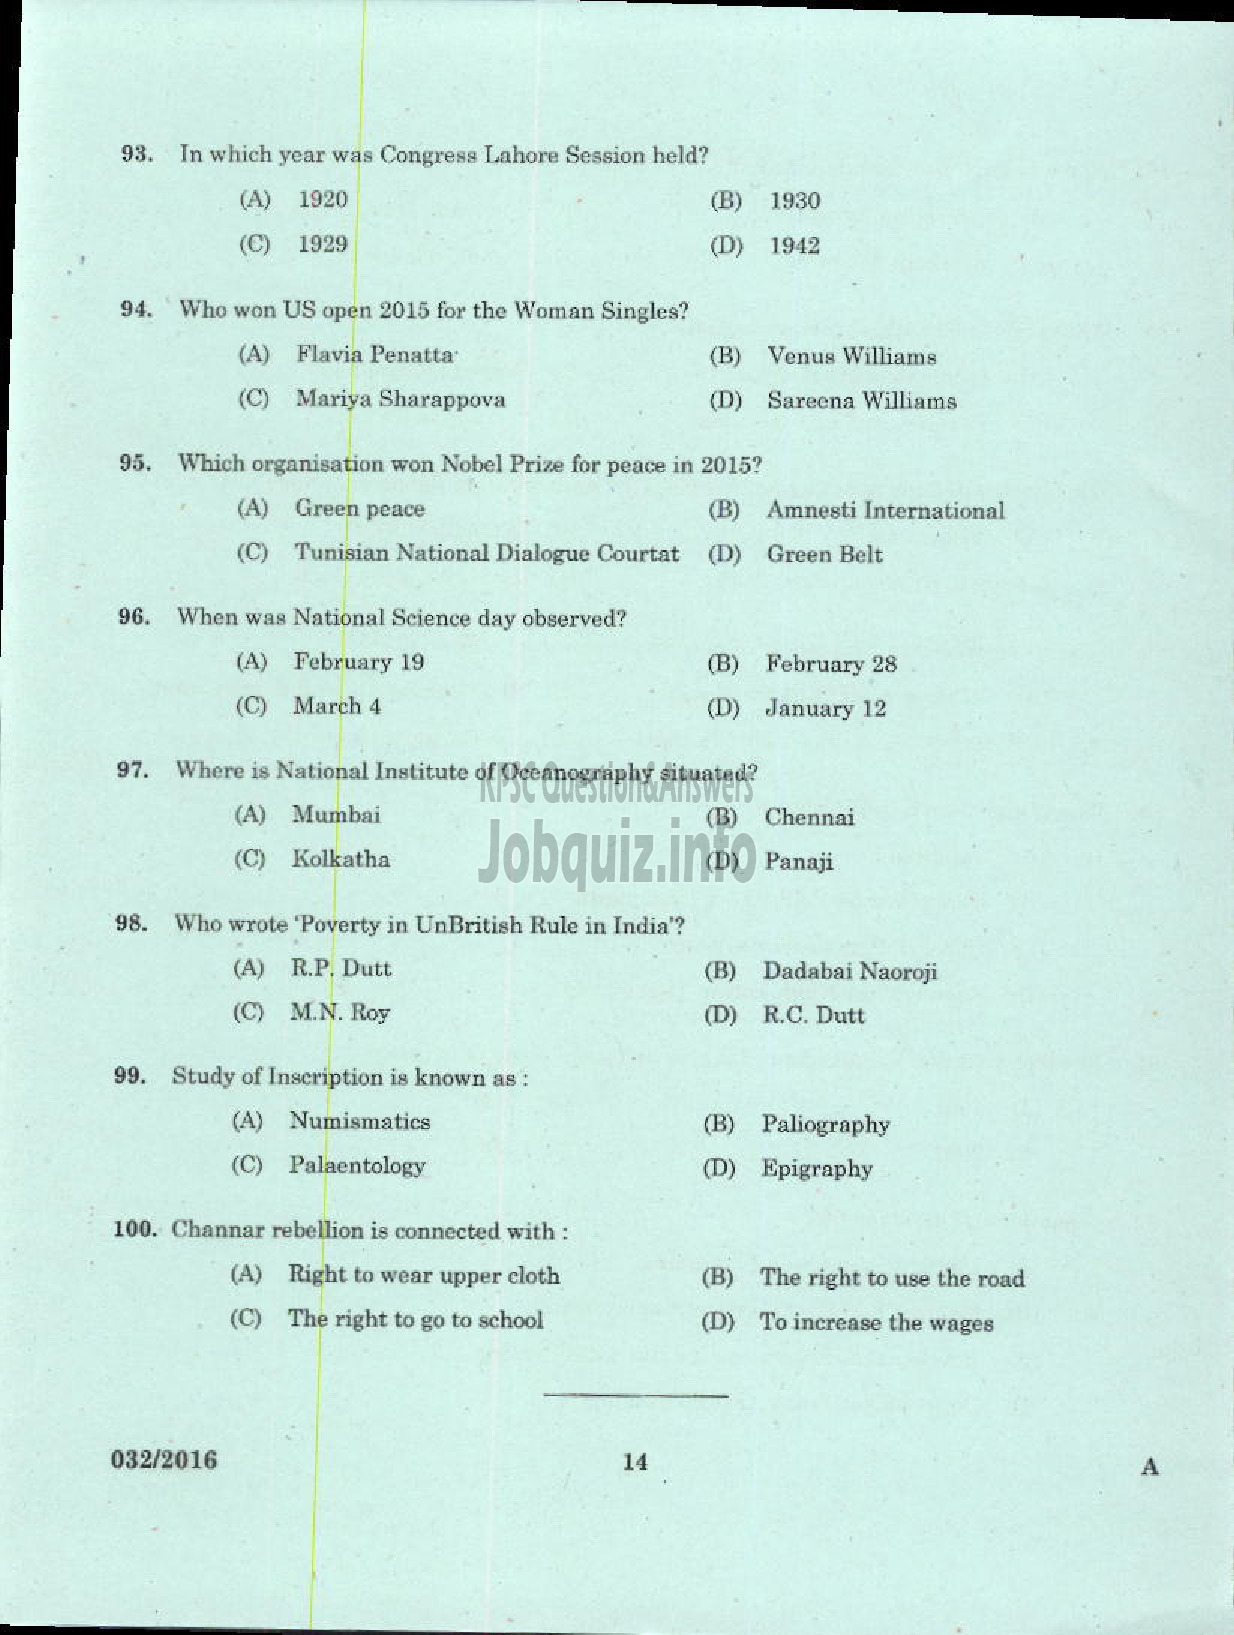 Kerala PSC Question Paper - TRADESMAN INSTRUMENT MECHANIC TECHNICAL EDUCATION-12